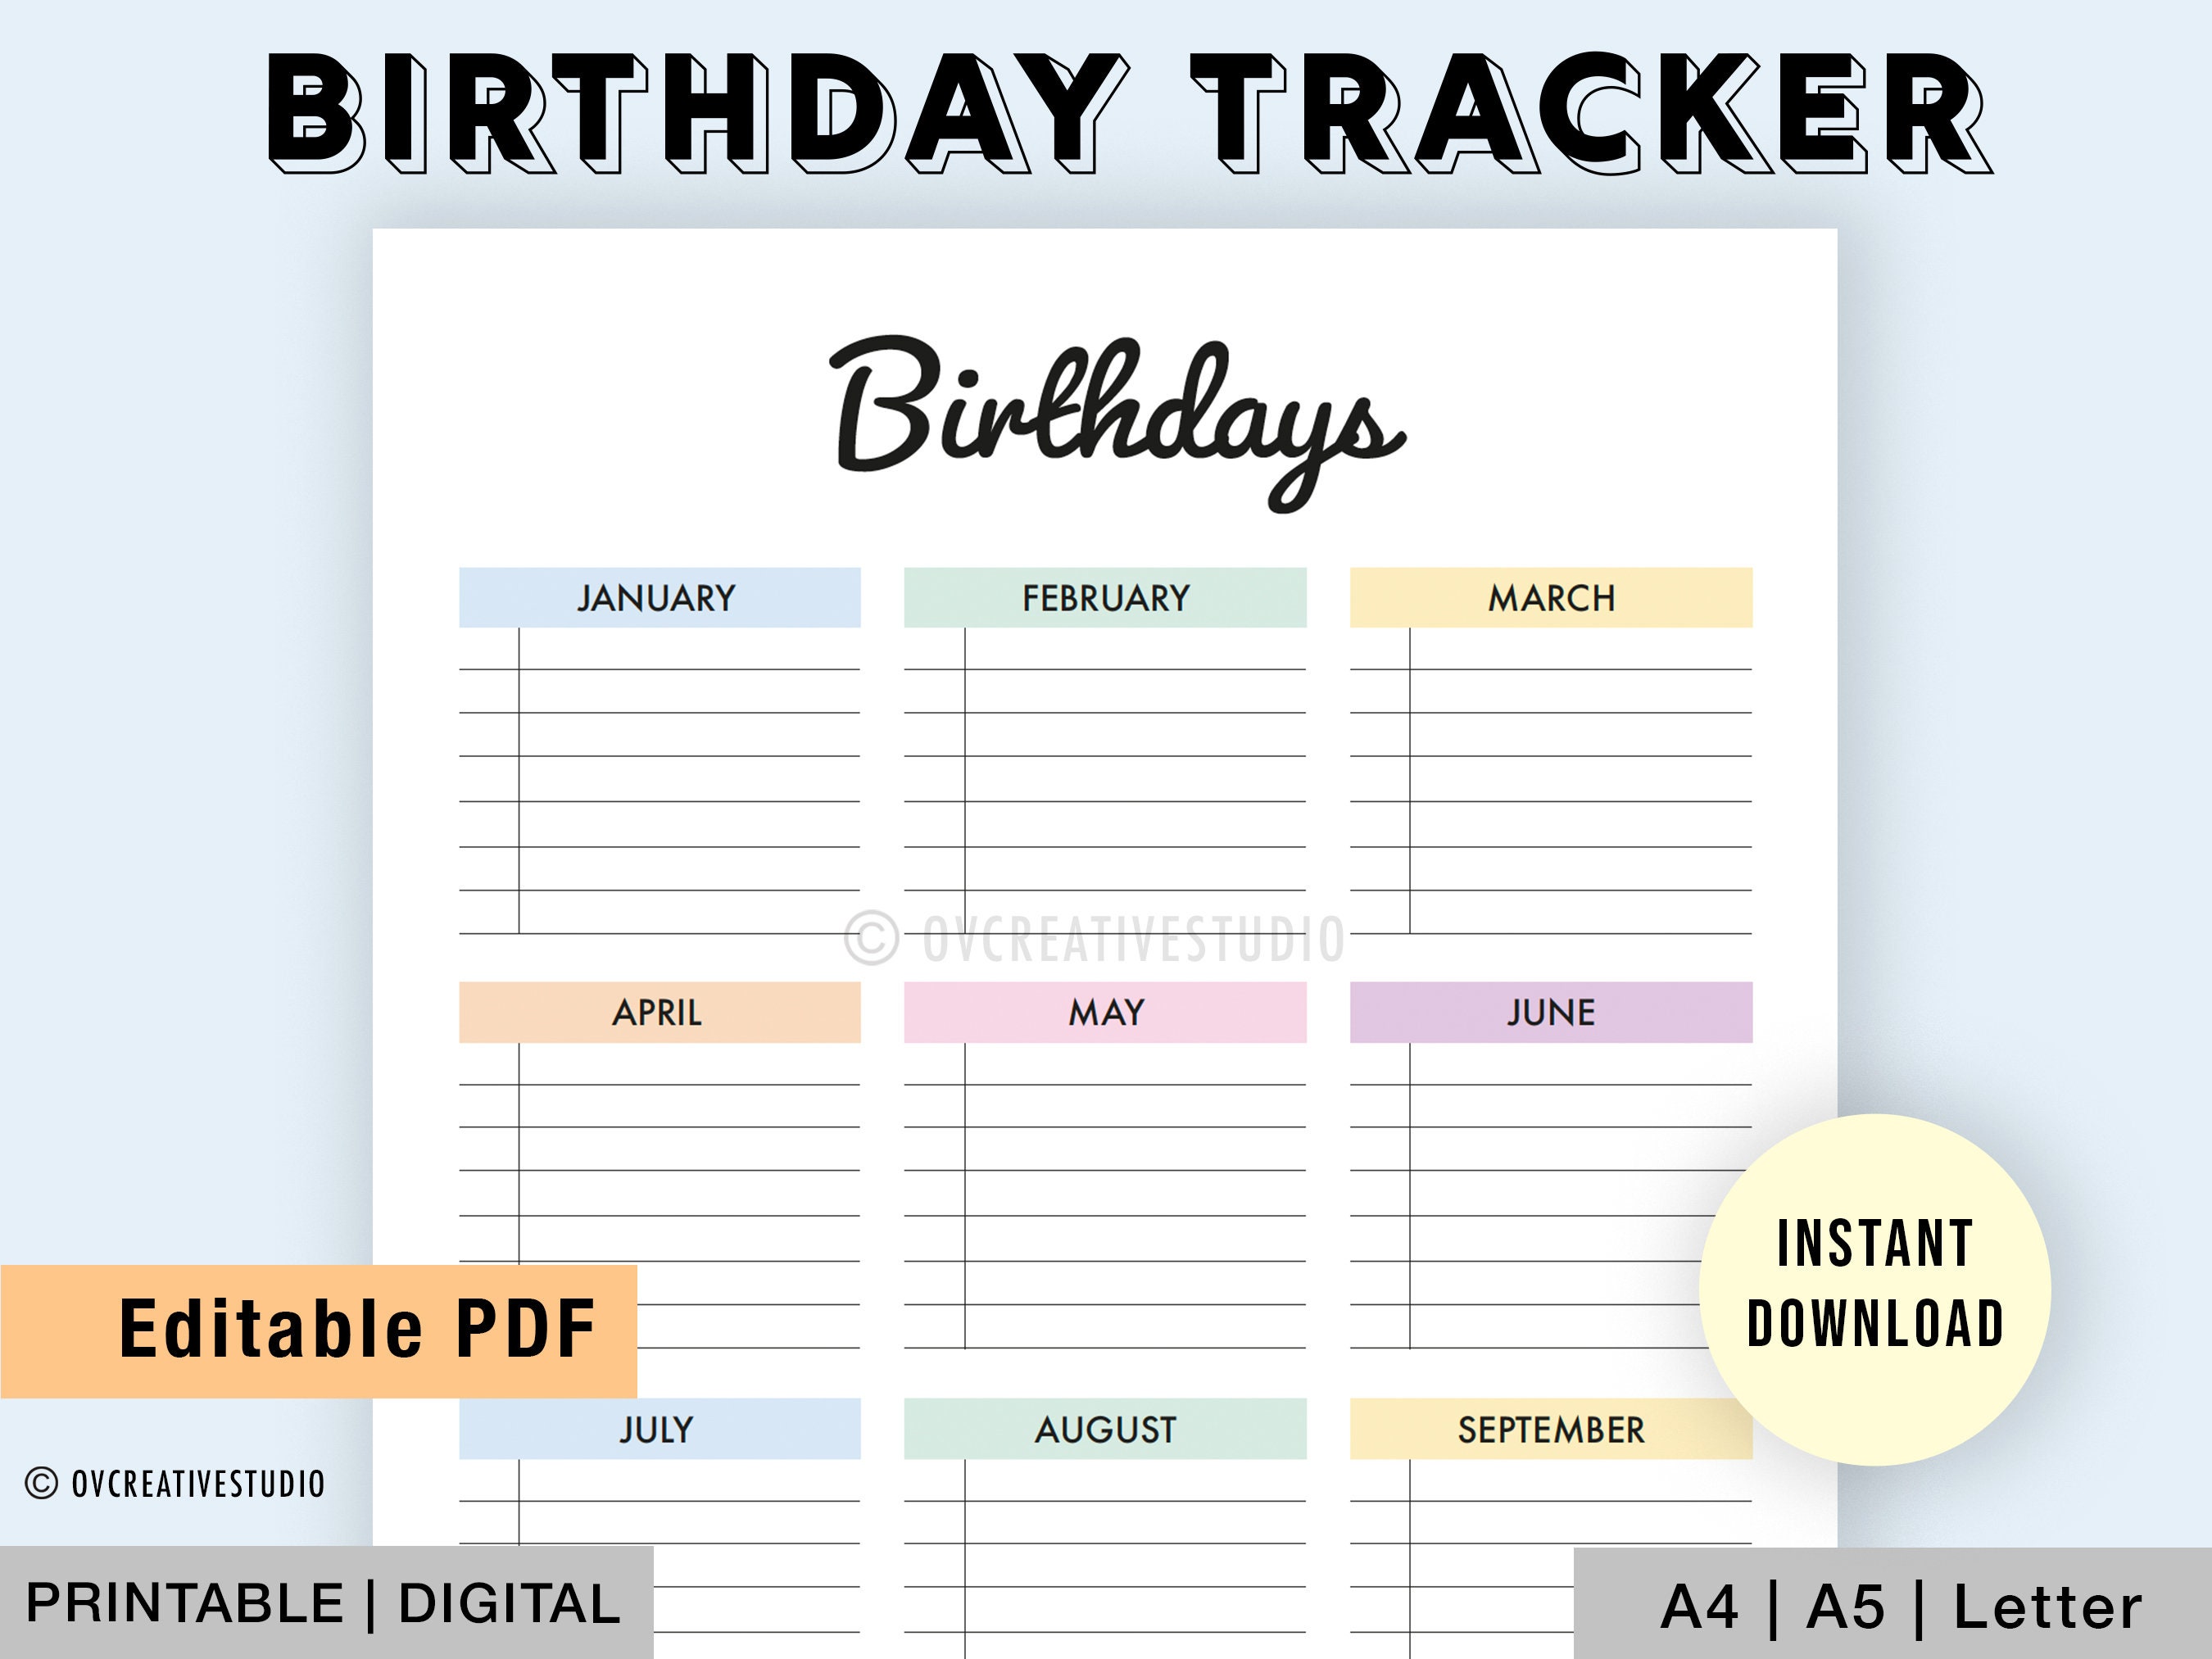 birthday-tracker-birthday-cards